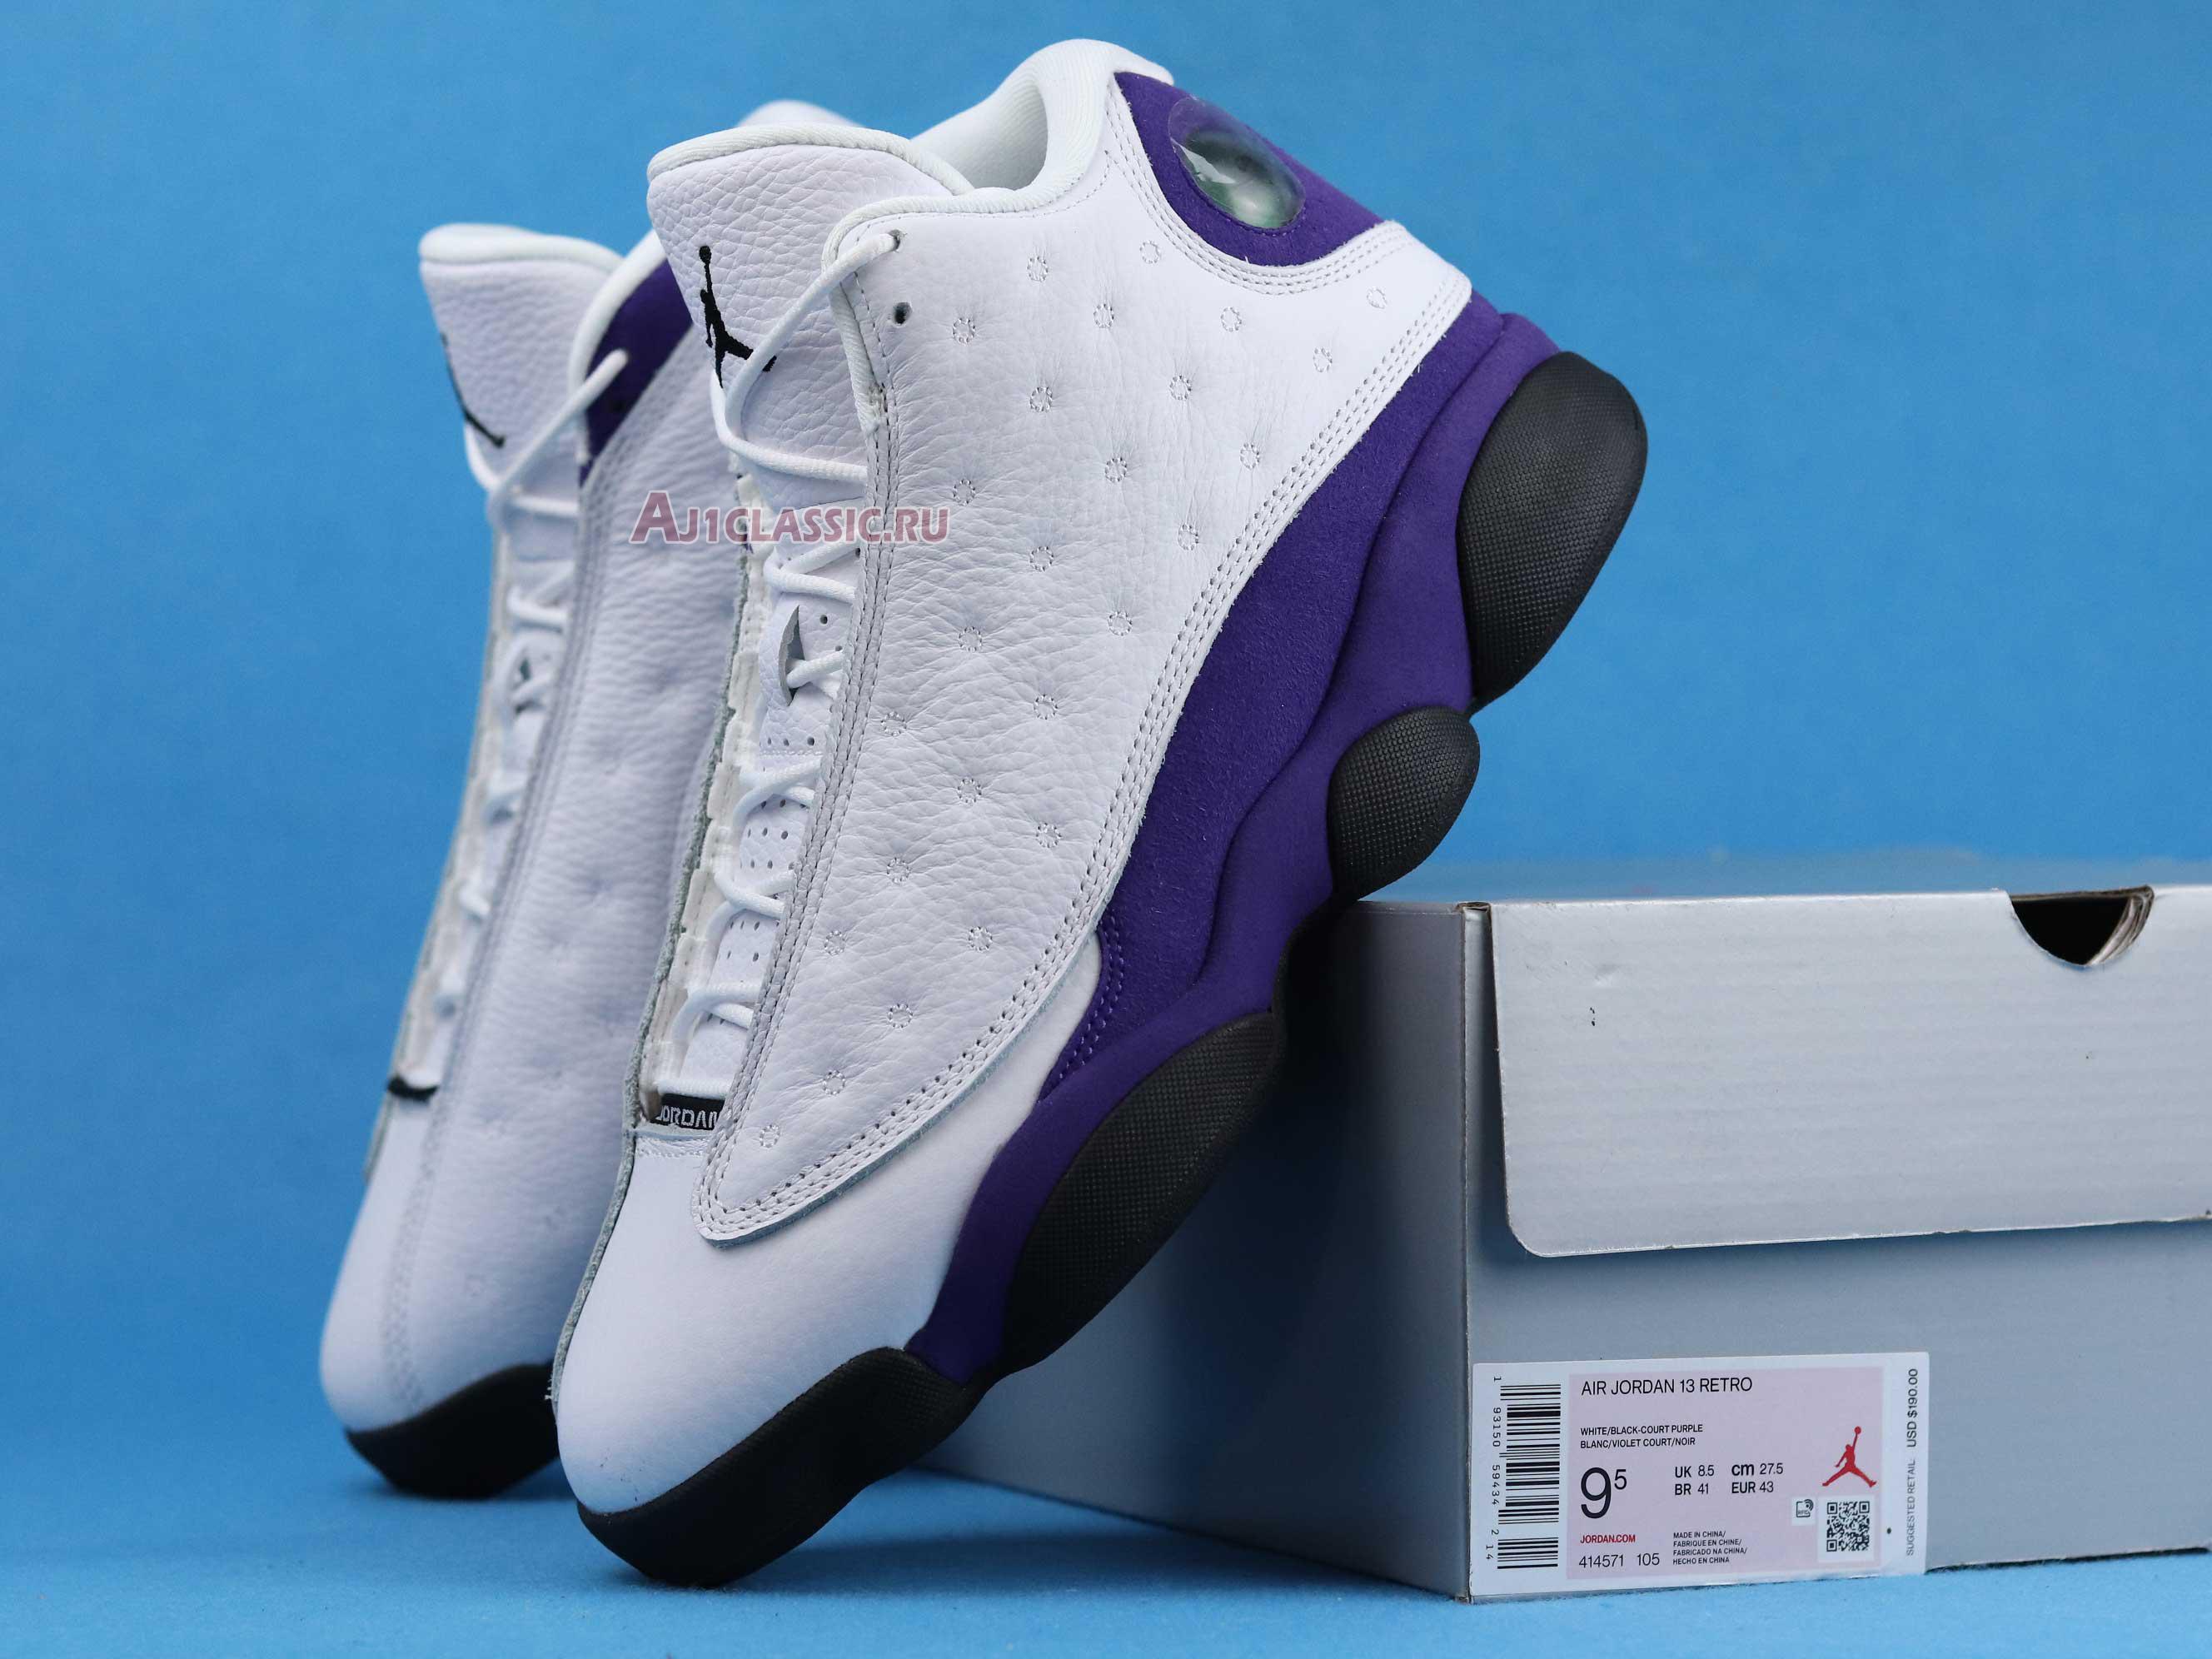 Air Jordan 13 Retro Lakers 414571-105 White/Black/Court Purple/University Gold Sneakers